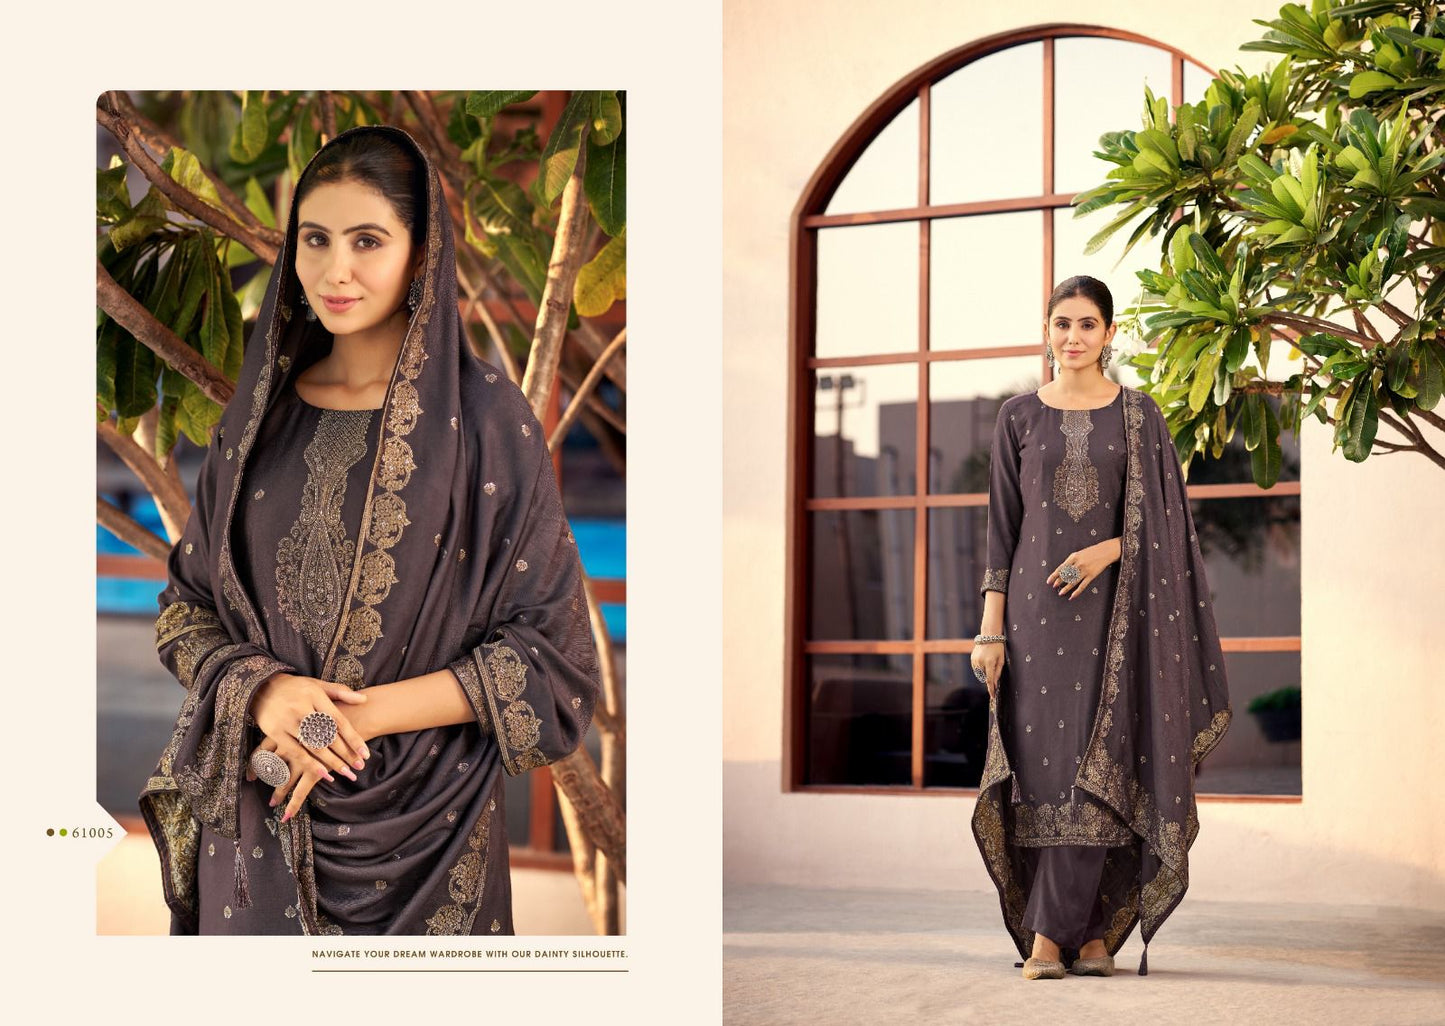 Mannat Nishant Fashion Pashmina Suits